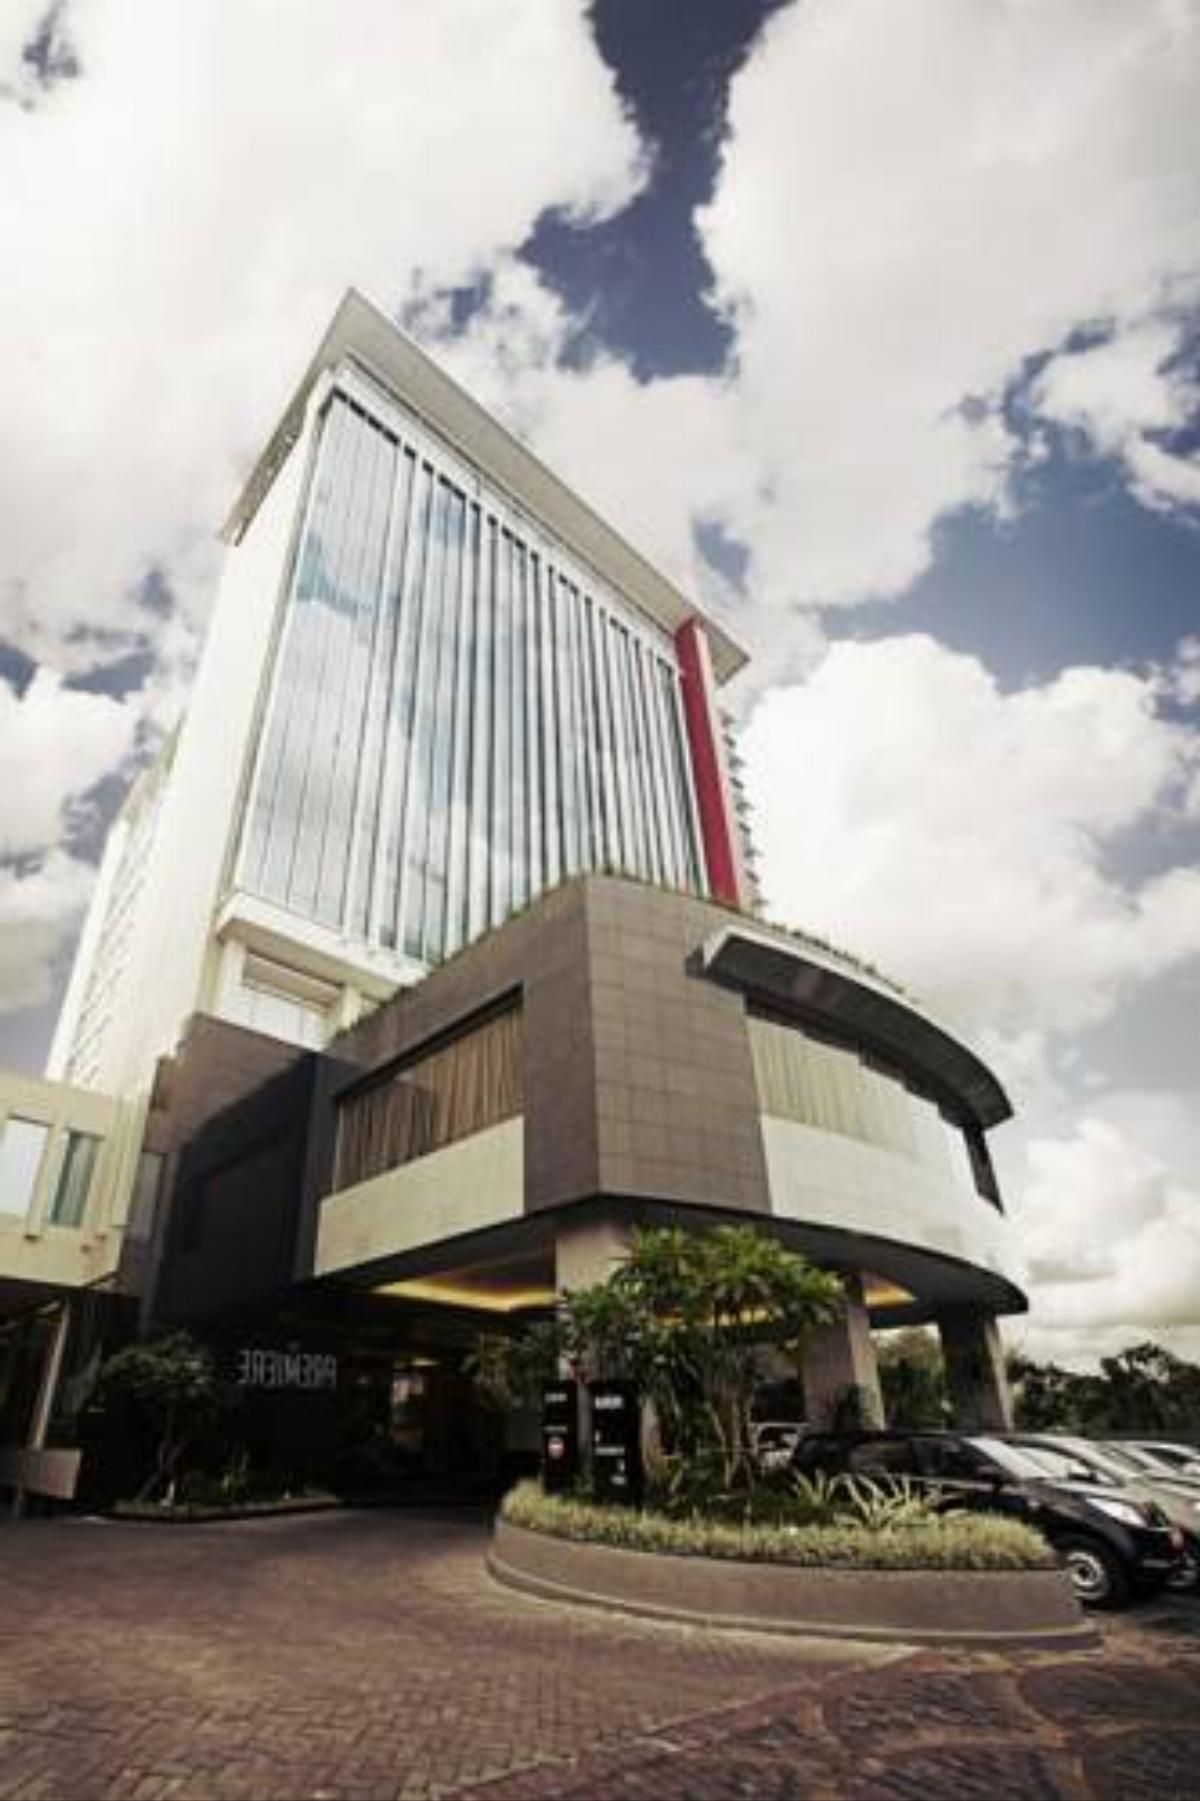 The Premiere Hotel Pekanbaru